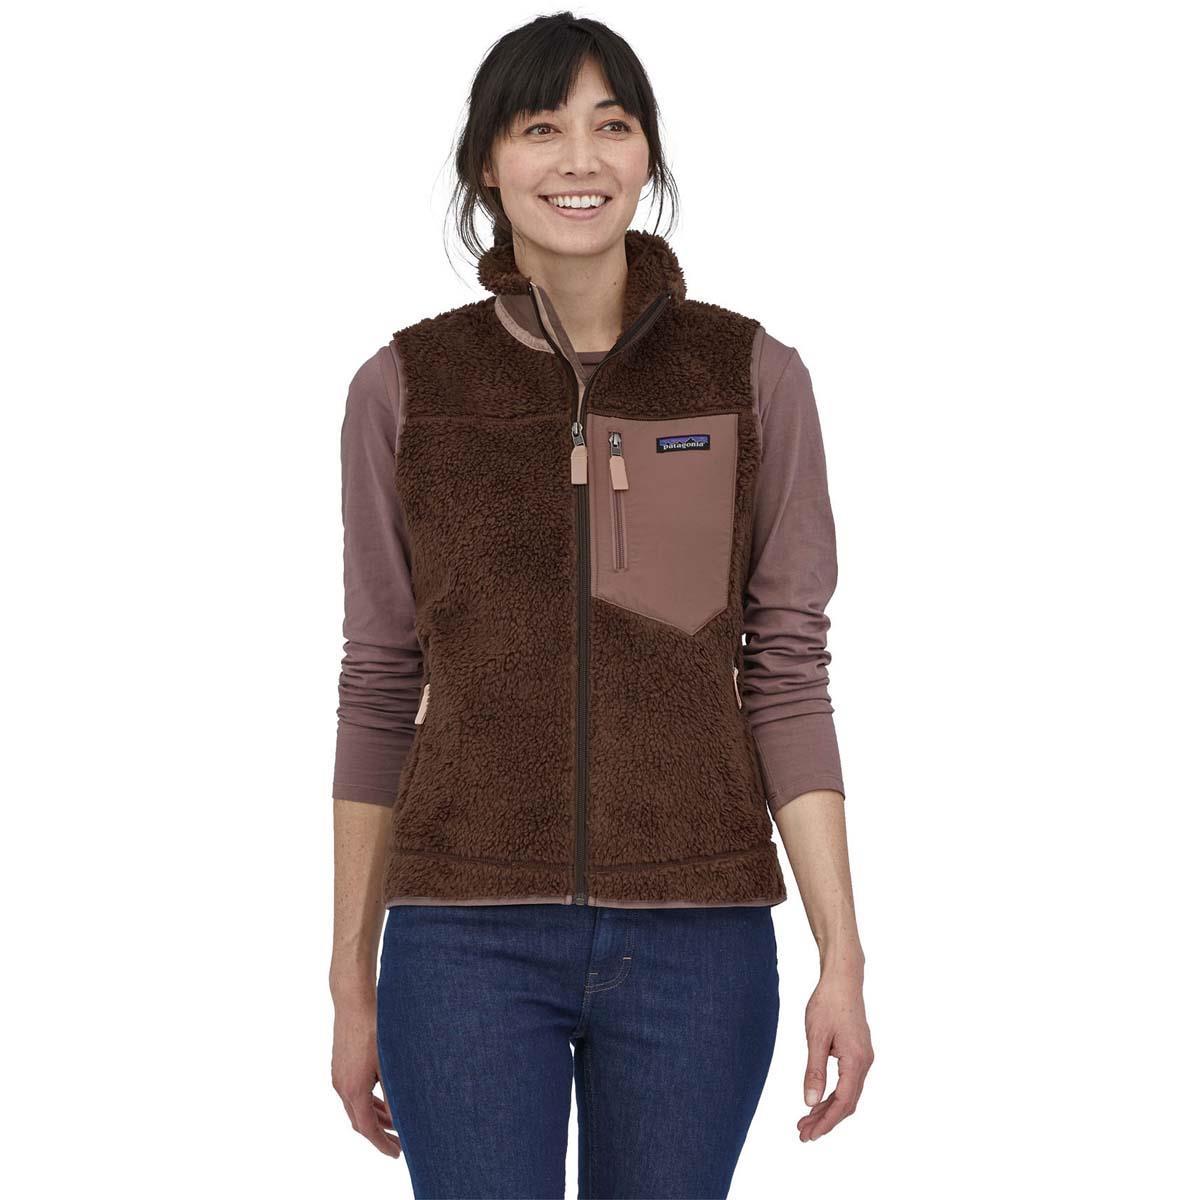 Patagonia Women's Retro-X Fleece Jacket, Large, Nest Brown